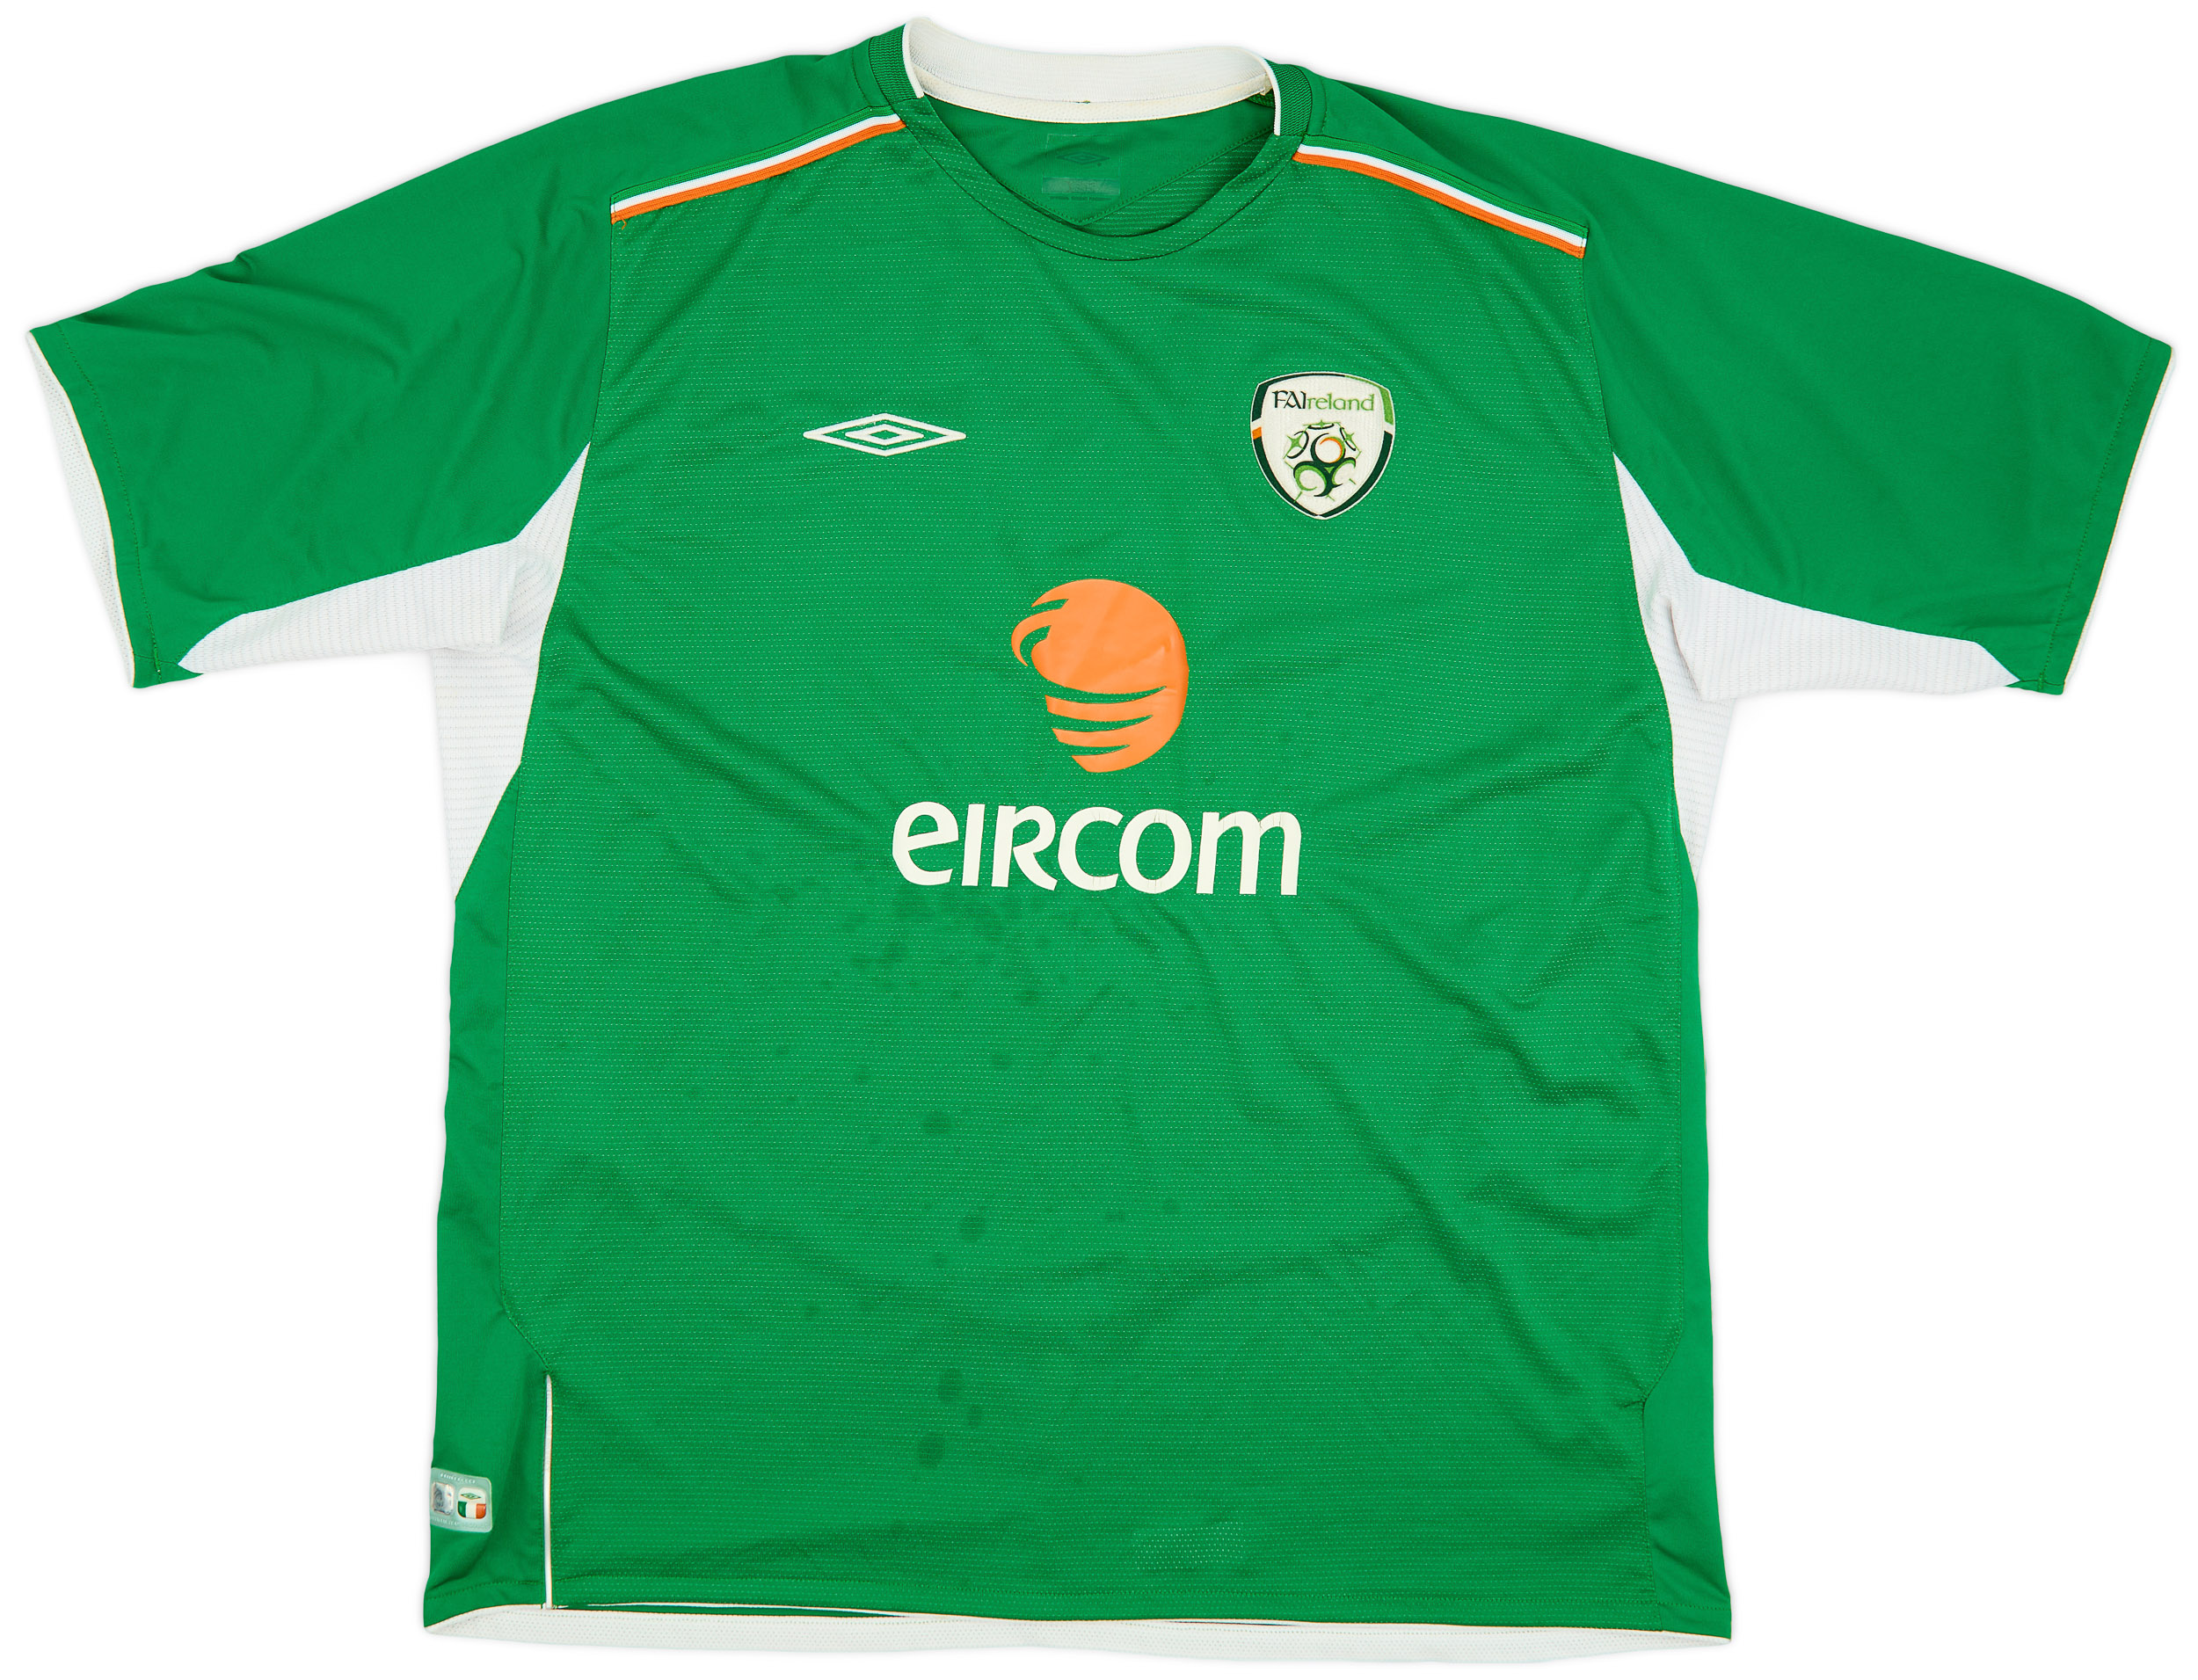 Retro Republic of Ireland Shirt